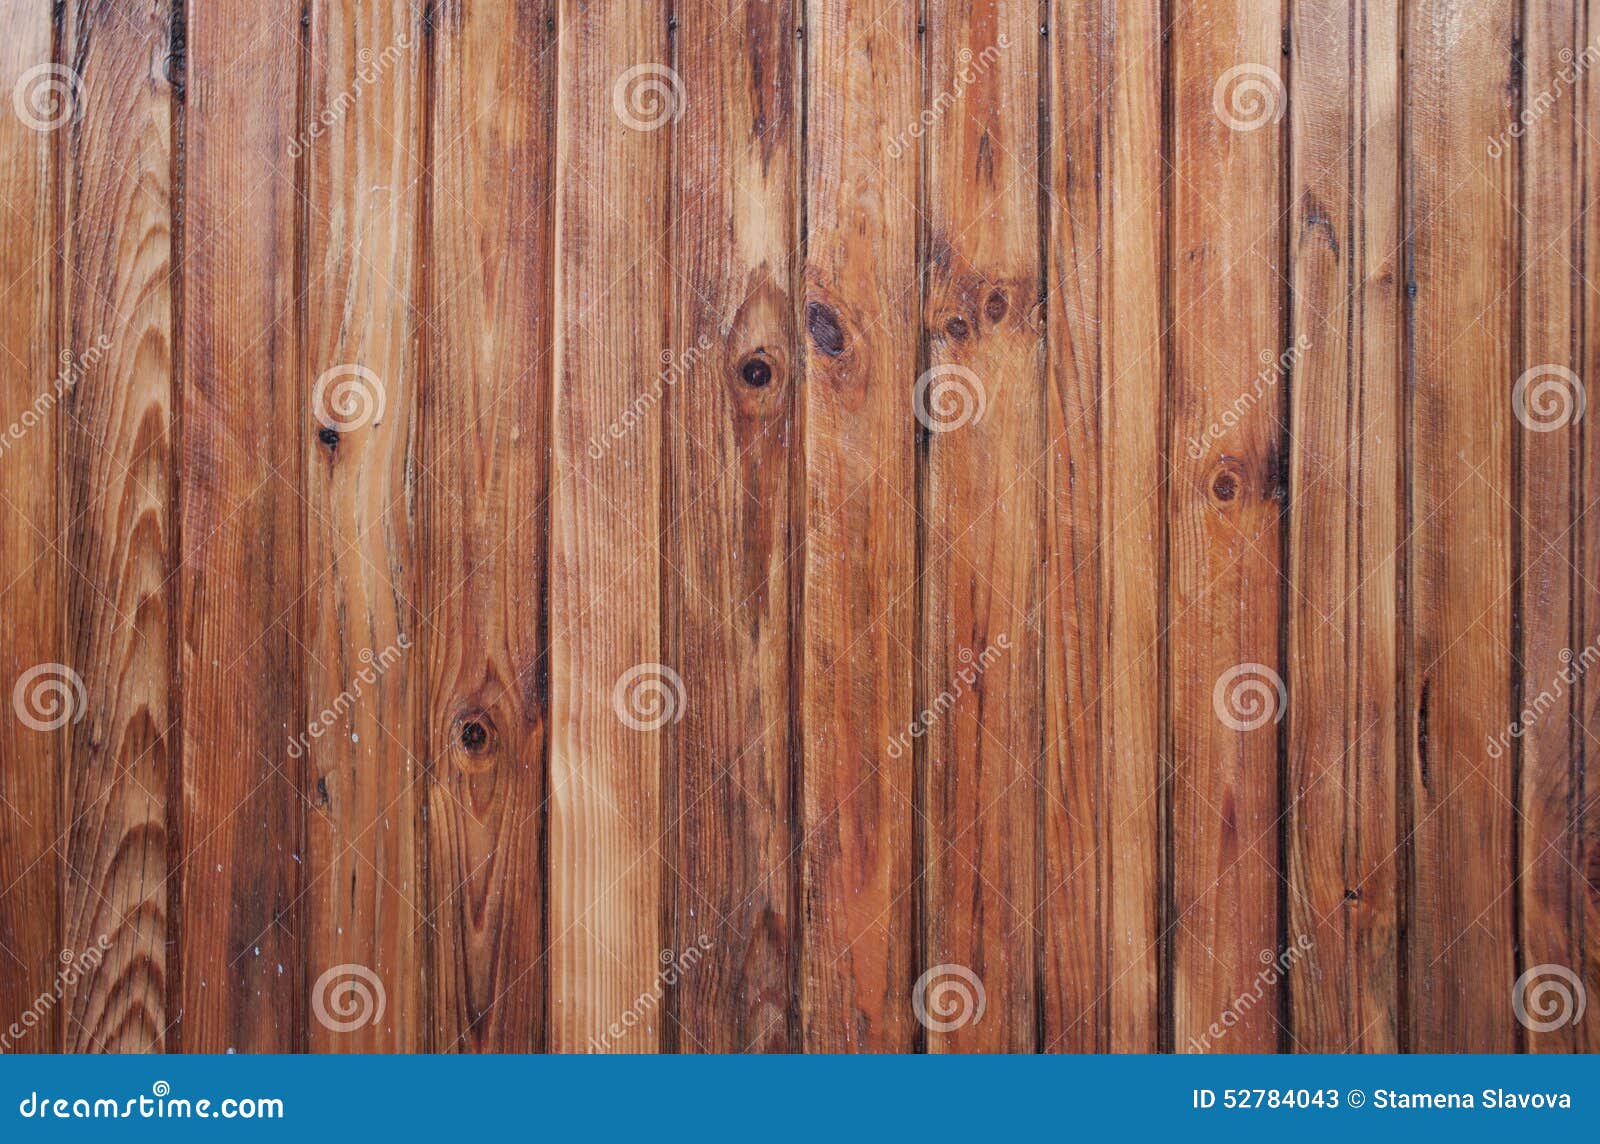 wood planks wall pattern